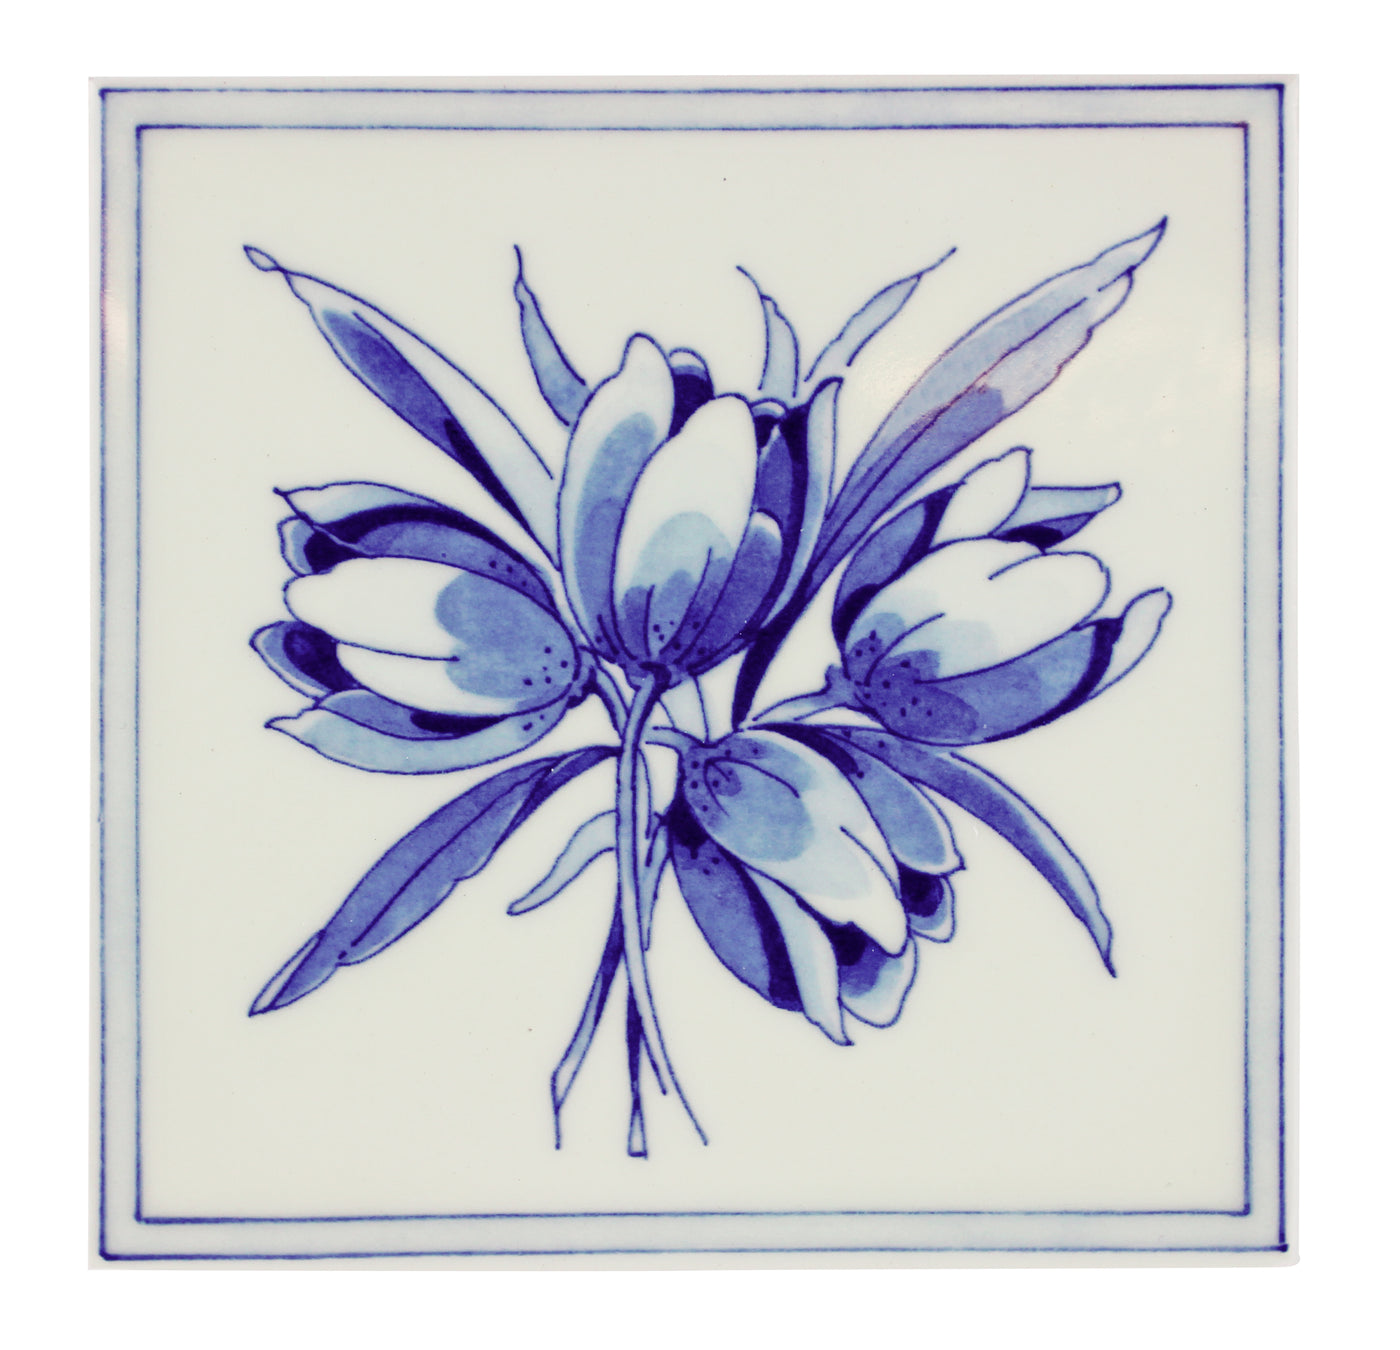 Tile Tulips (310) Delft Blue by Royal Delft